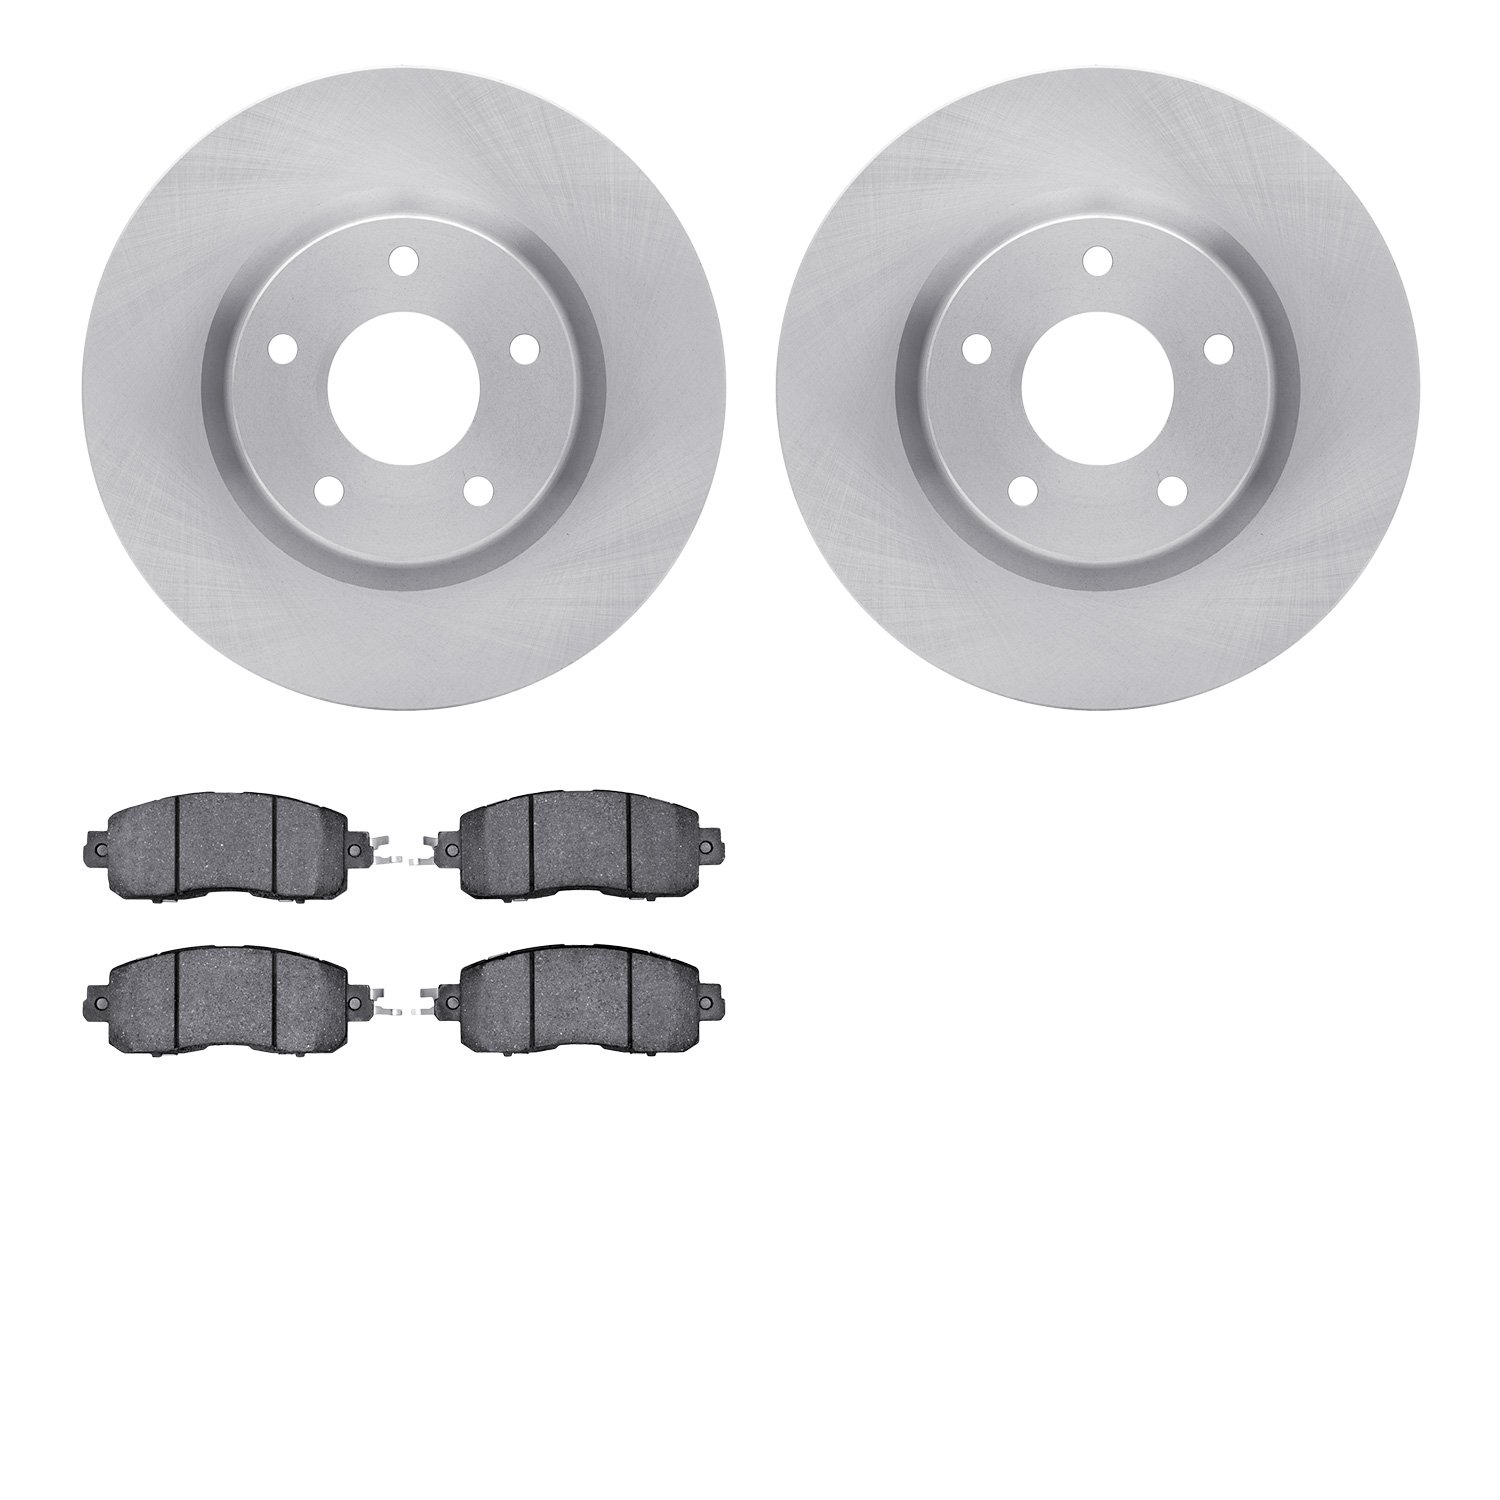 6302-67126 Brake Rotors with 3000-Series Ceramic Brake Pads Kit, Fits Select Infiniti/Nissan, Position: Front